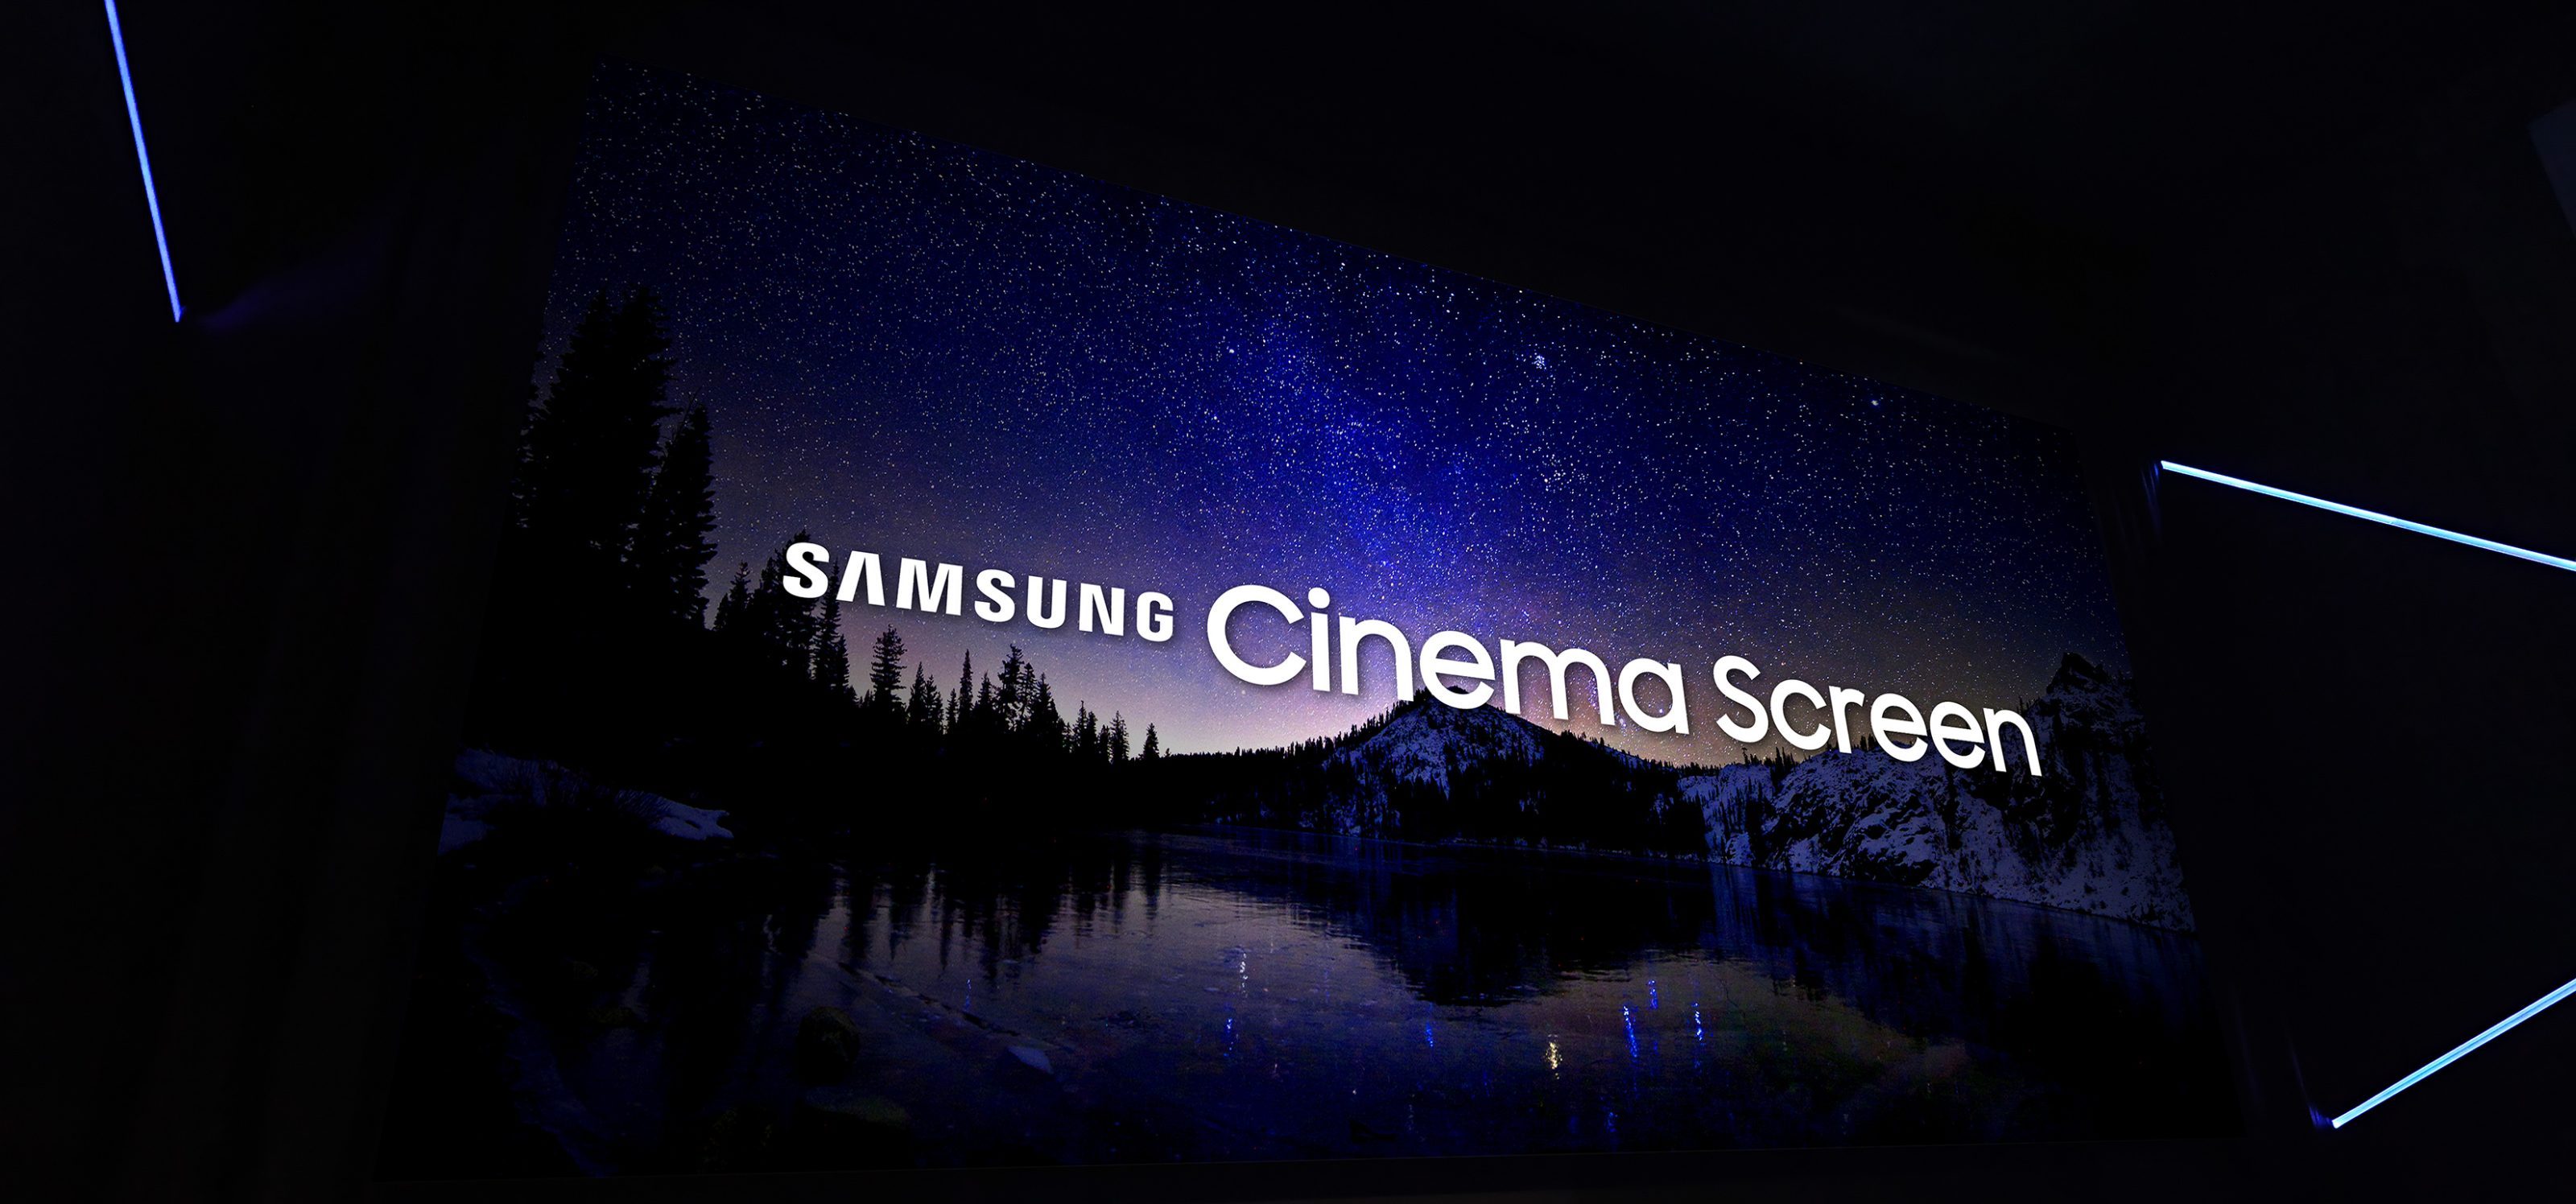 Samsung Cinema LED Screen1 e1499893909333